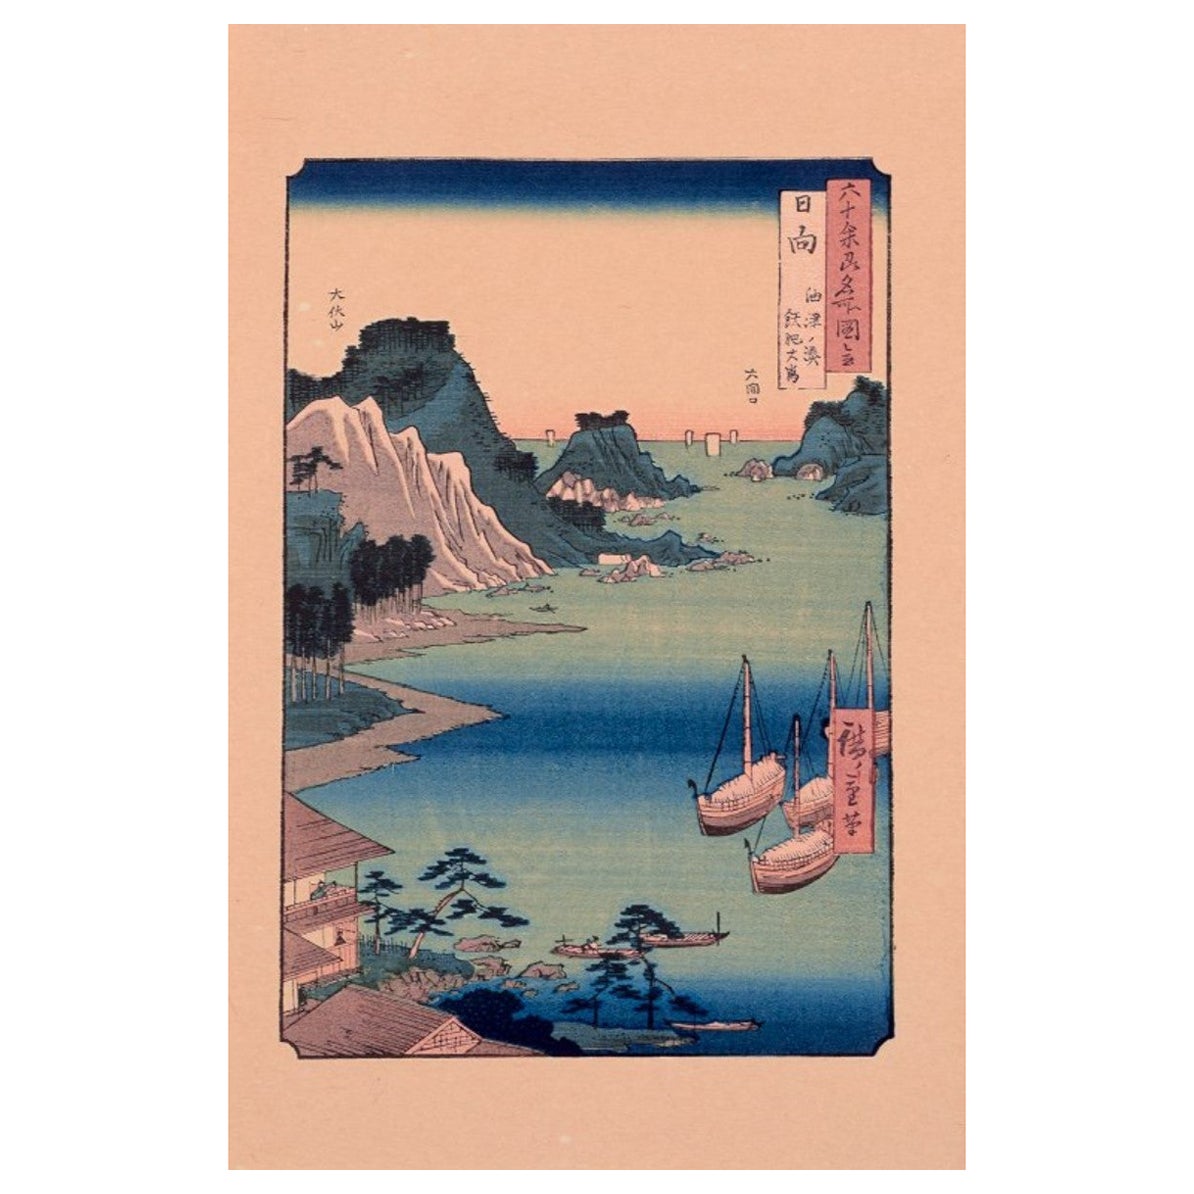 Ando Hiroshige, Japanese woodblock print on paper. Province of Hyuga. 